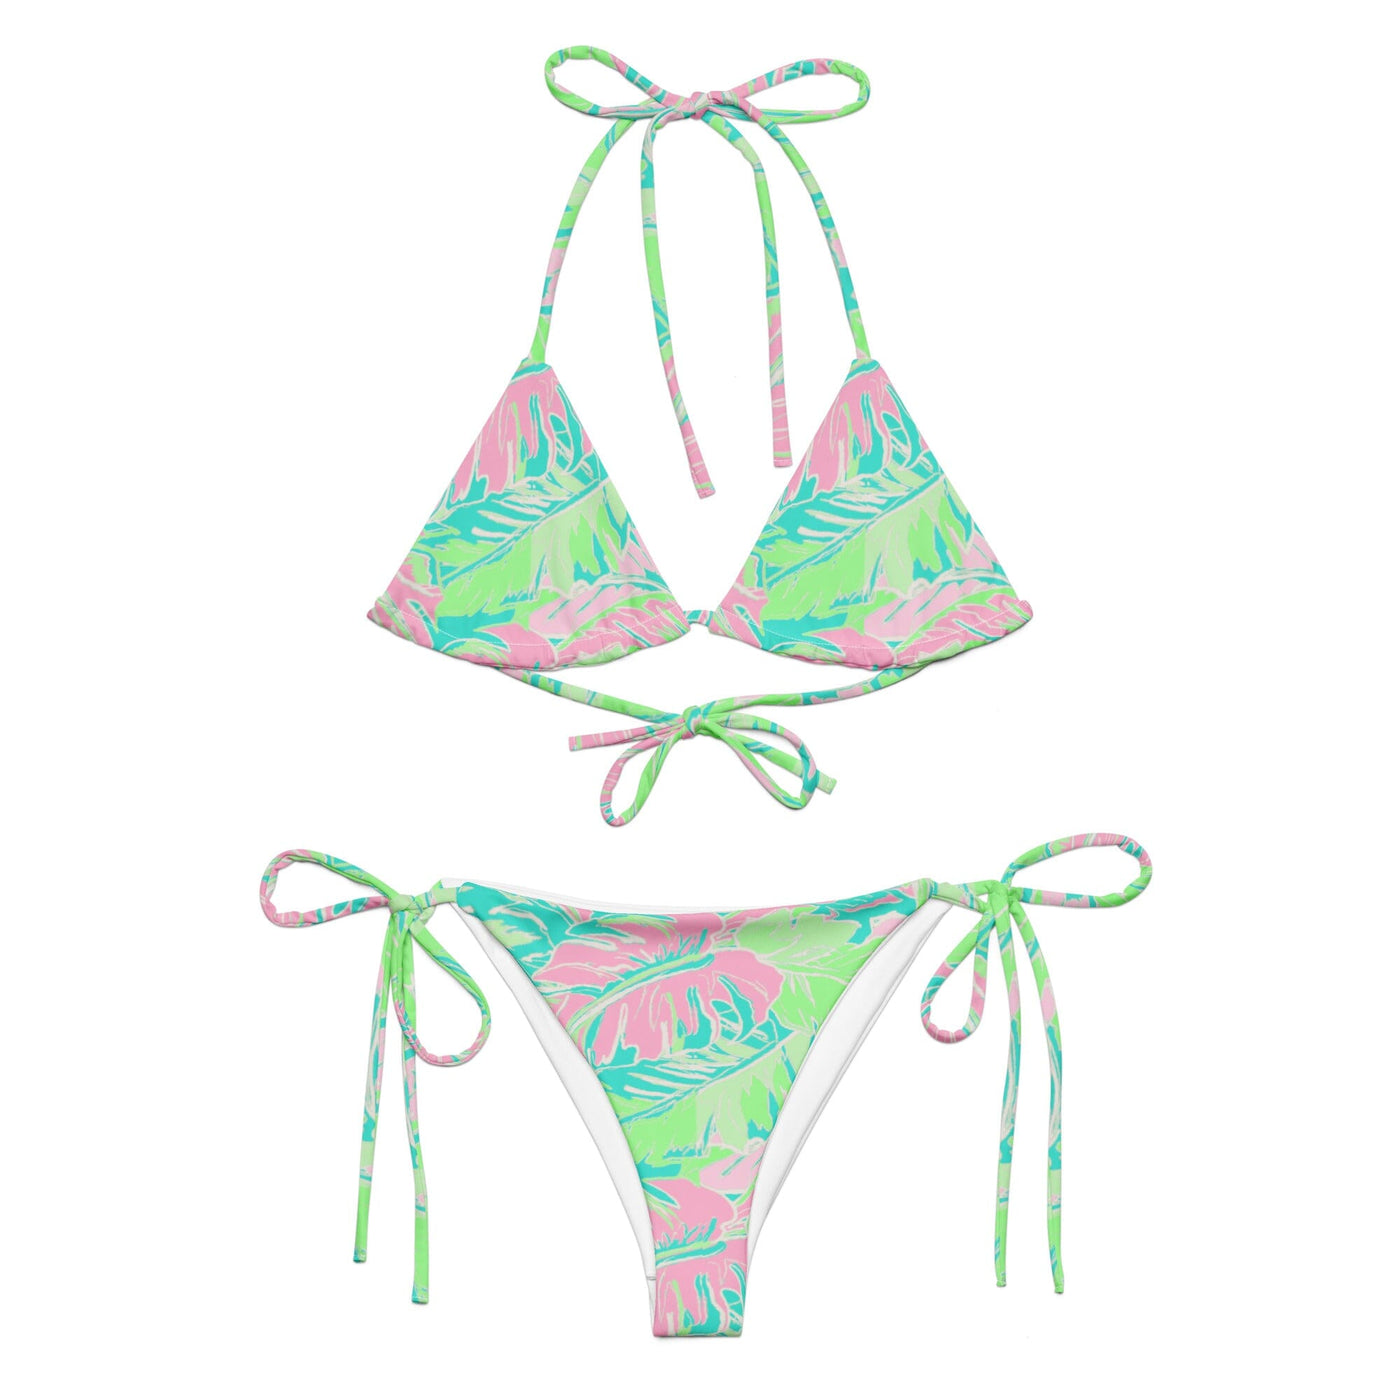 Florida Keys Bikini - Coastal Cool - Swimwear and Beachwear - Recycled fabrics